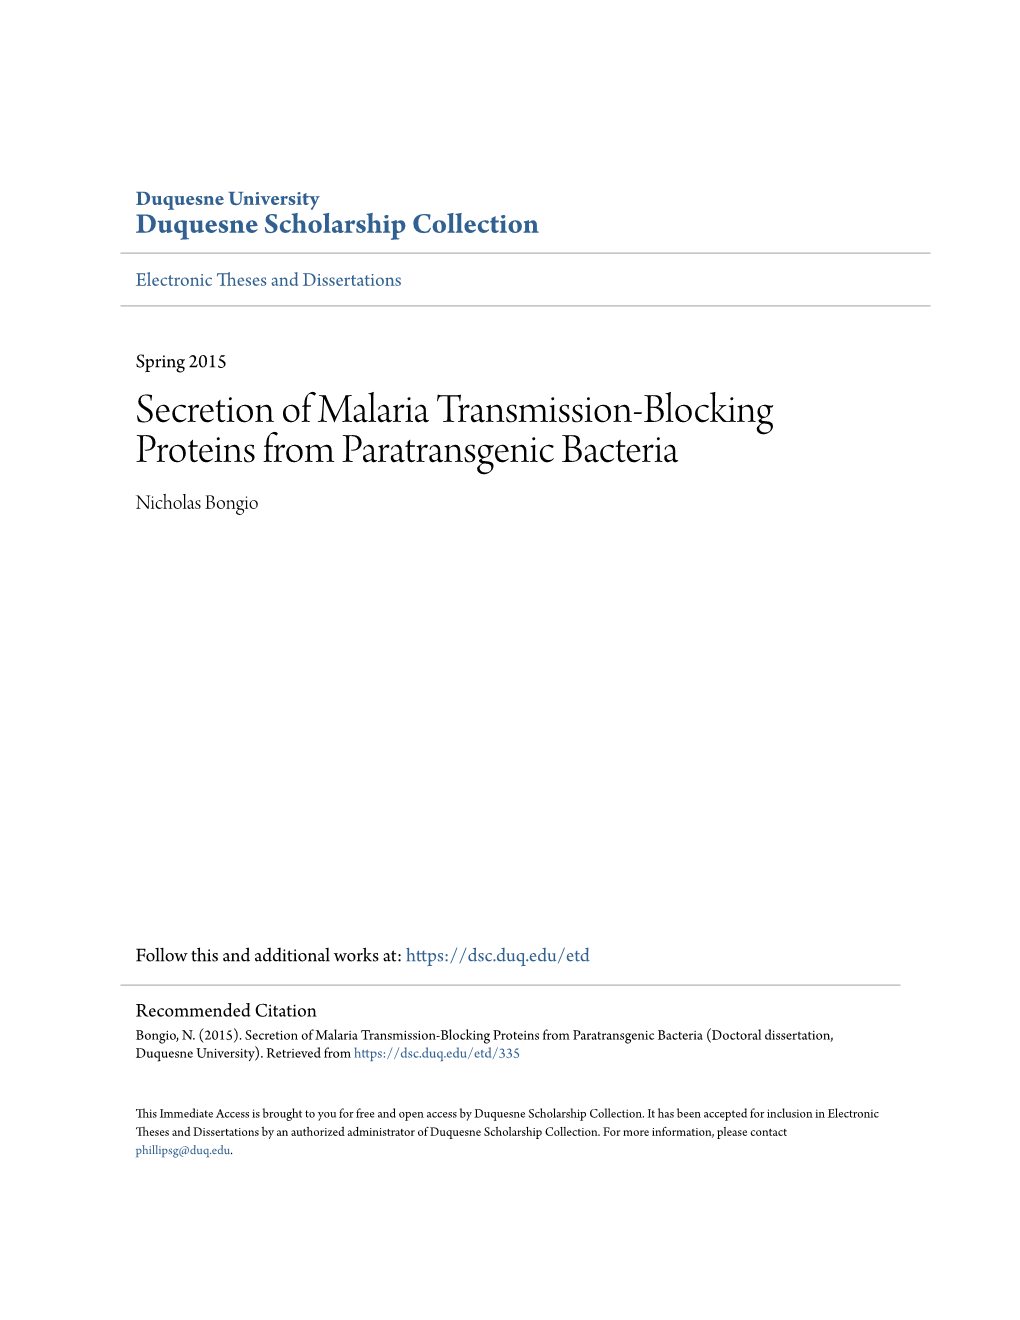 Secretion of Malaria Transmission-Blocking Proteins from Paratransgenic Bacteria Nicholas Bongio